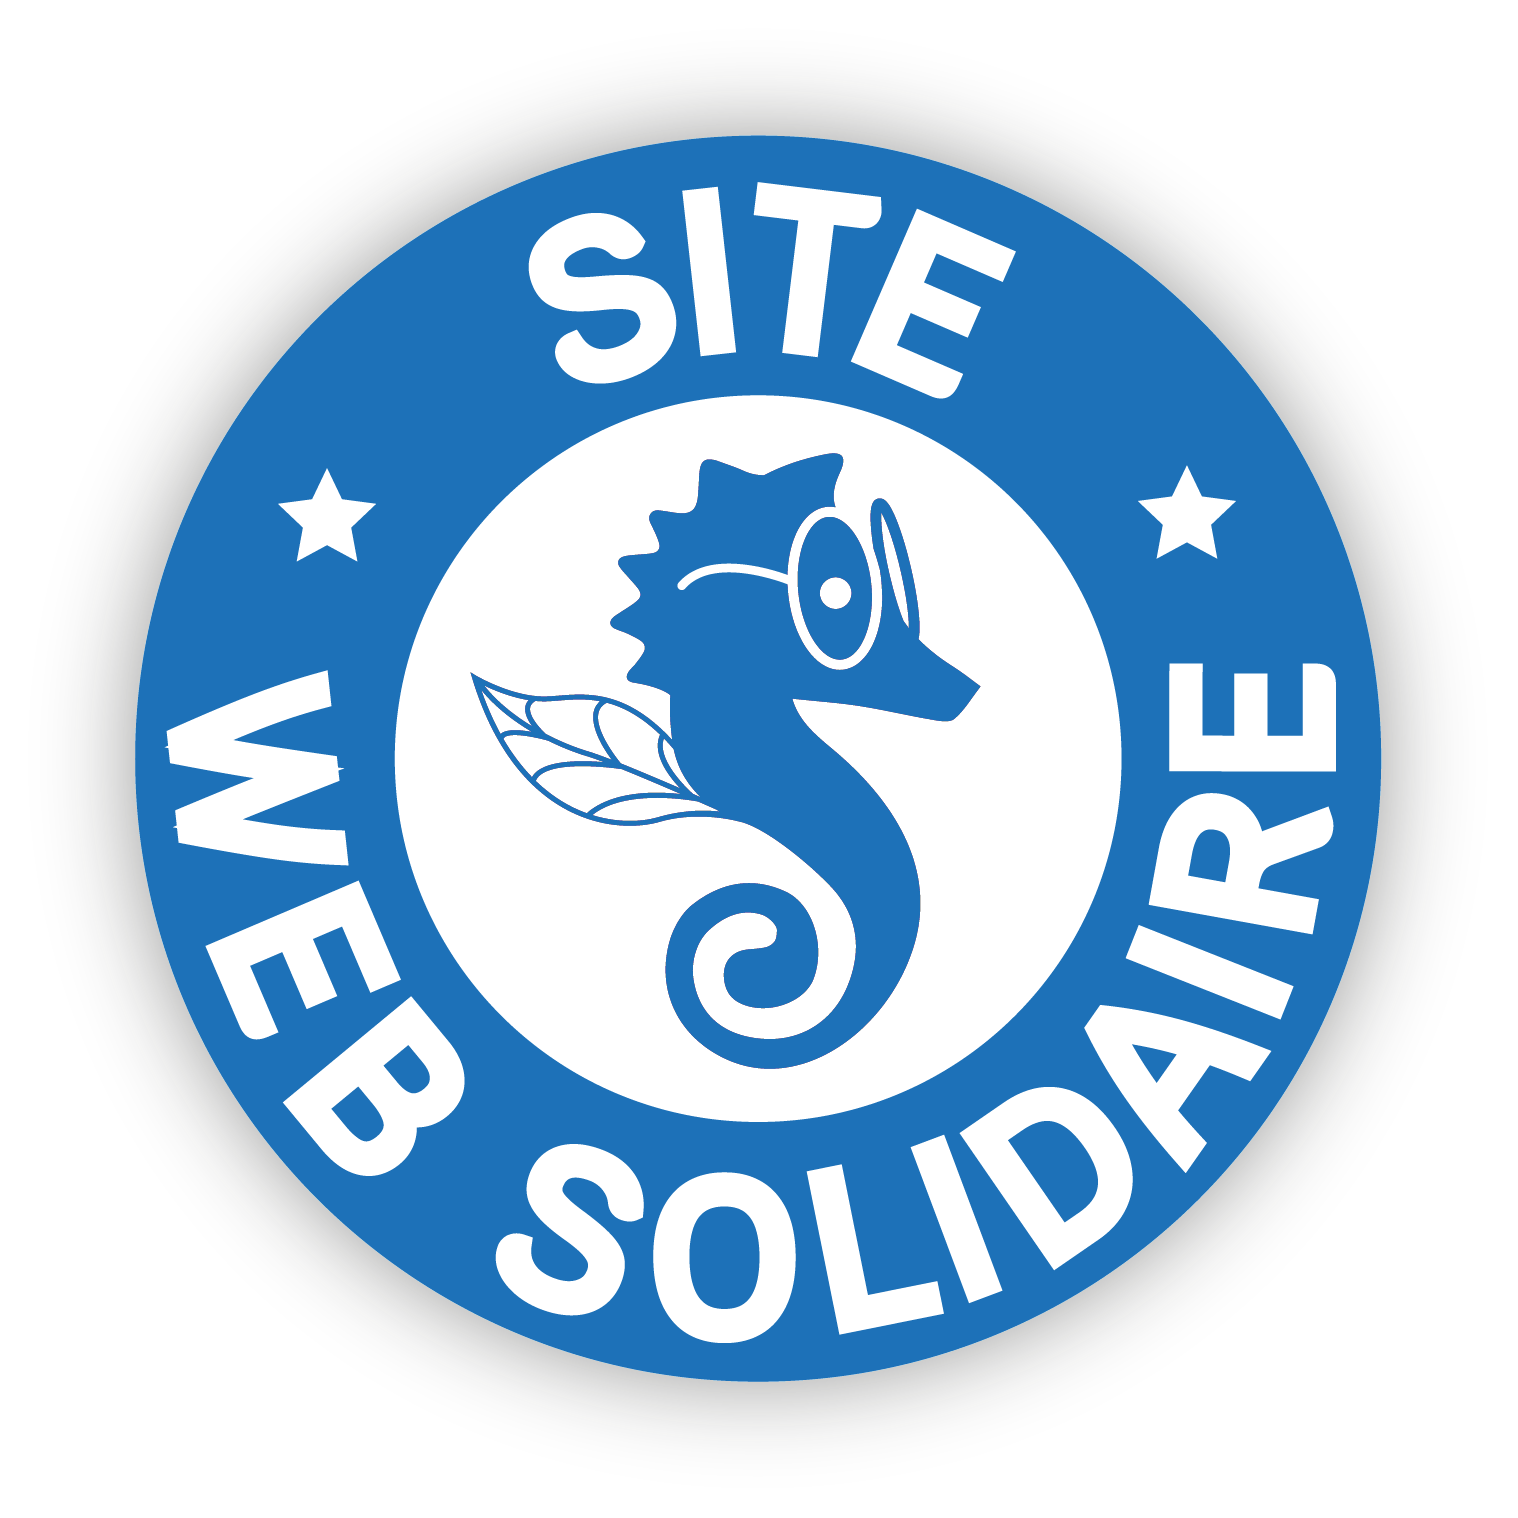 Pastille site web solidaire